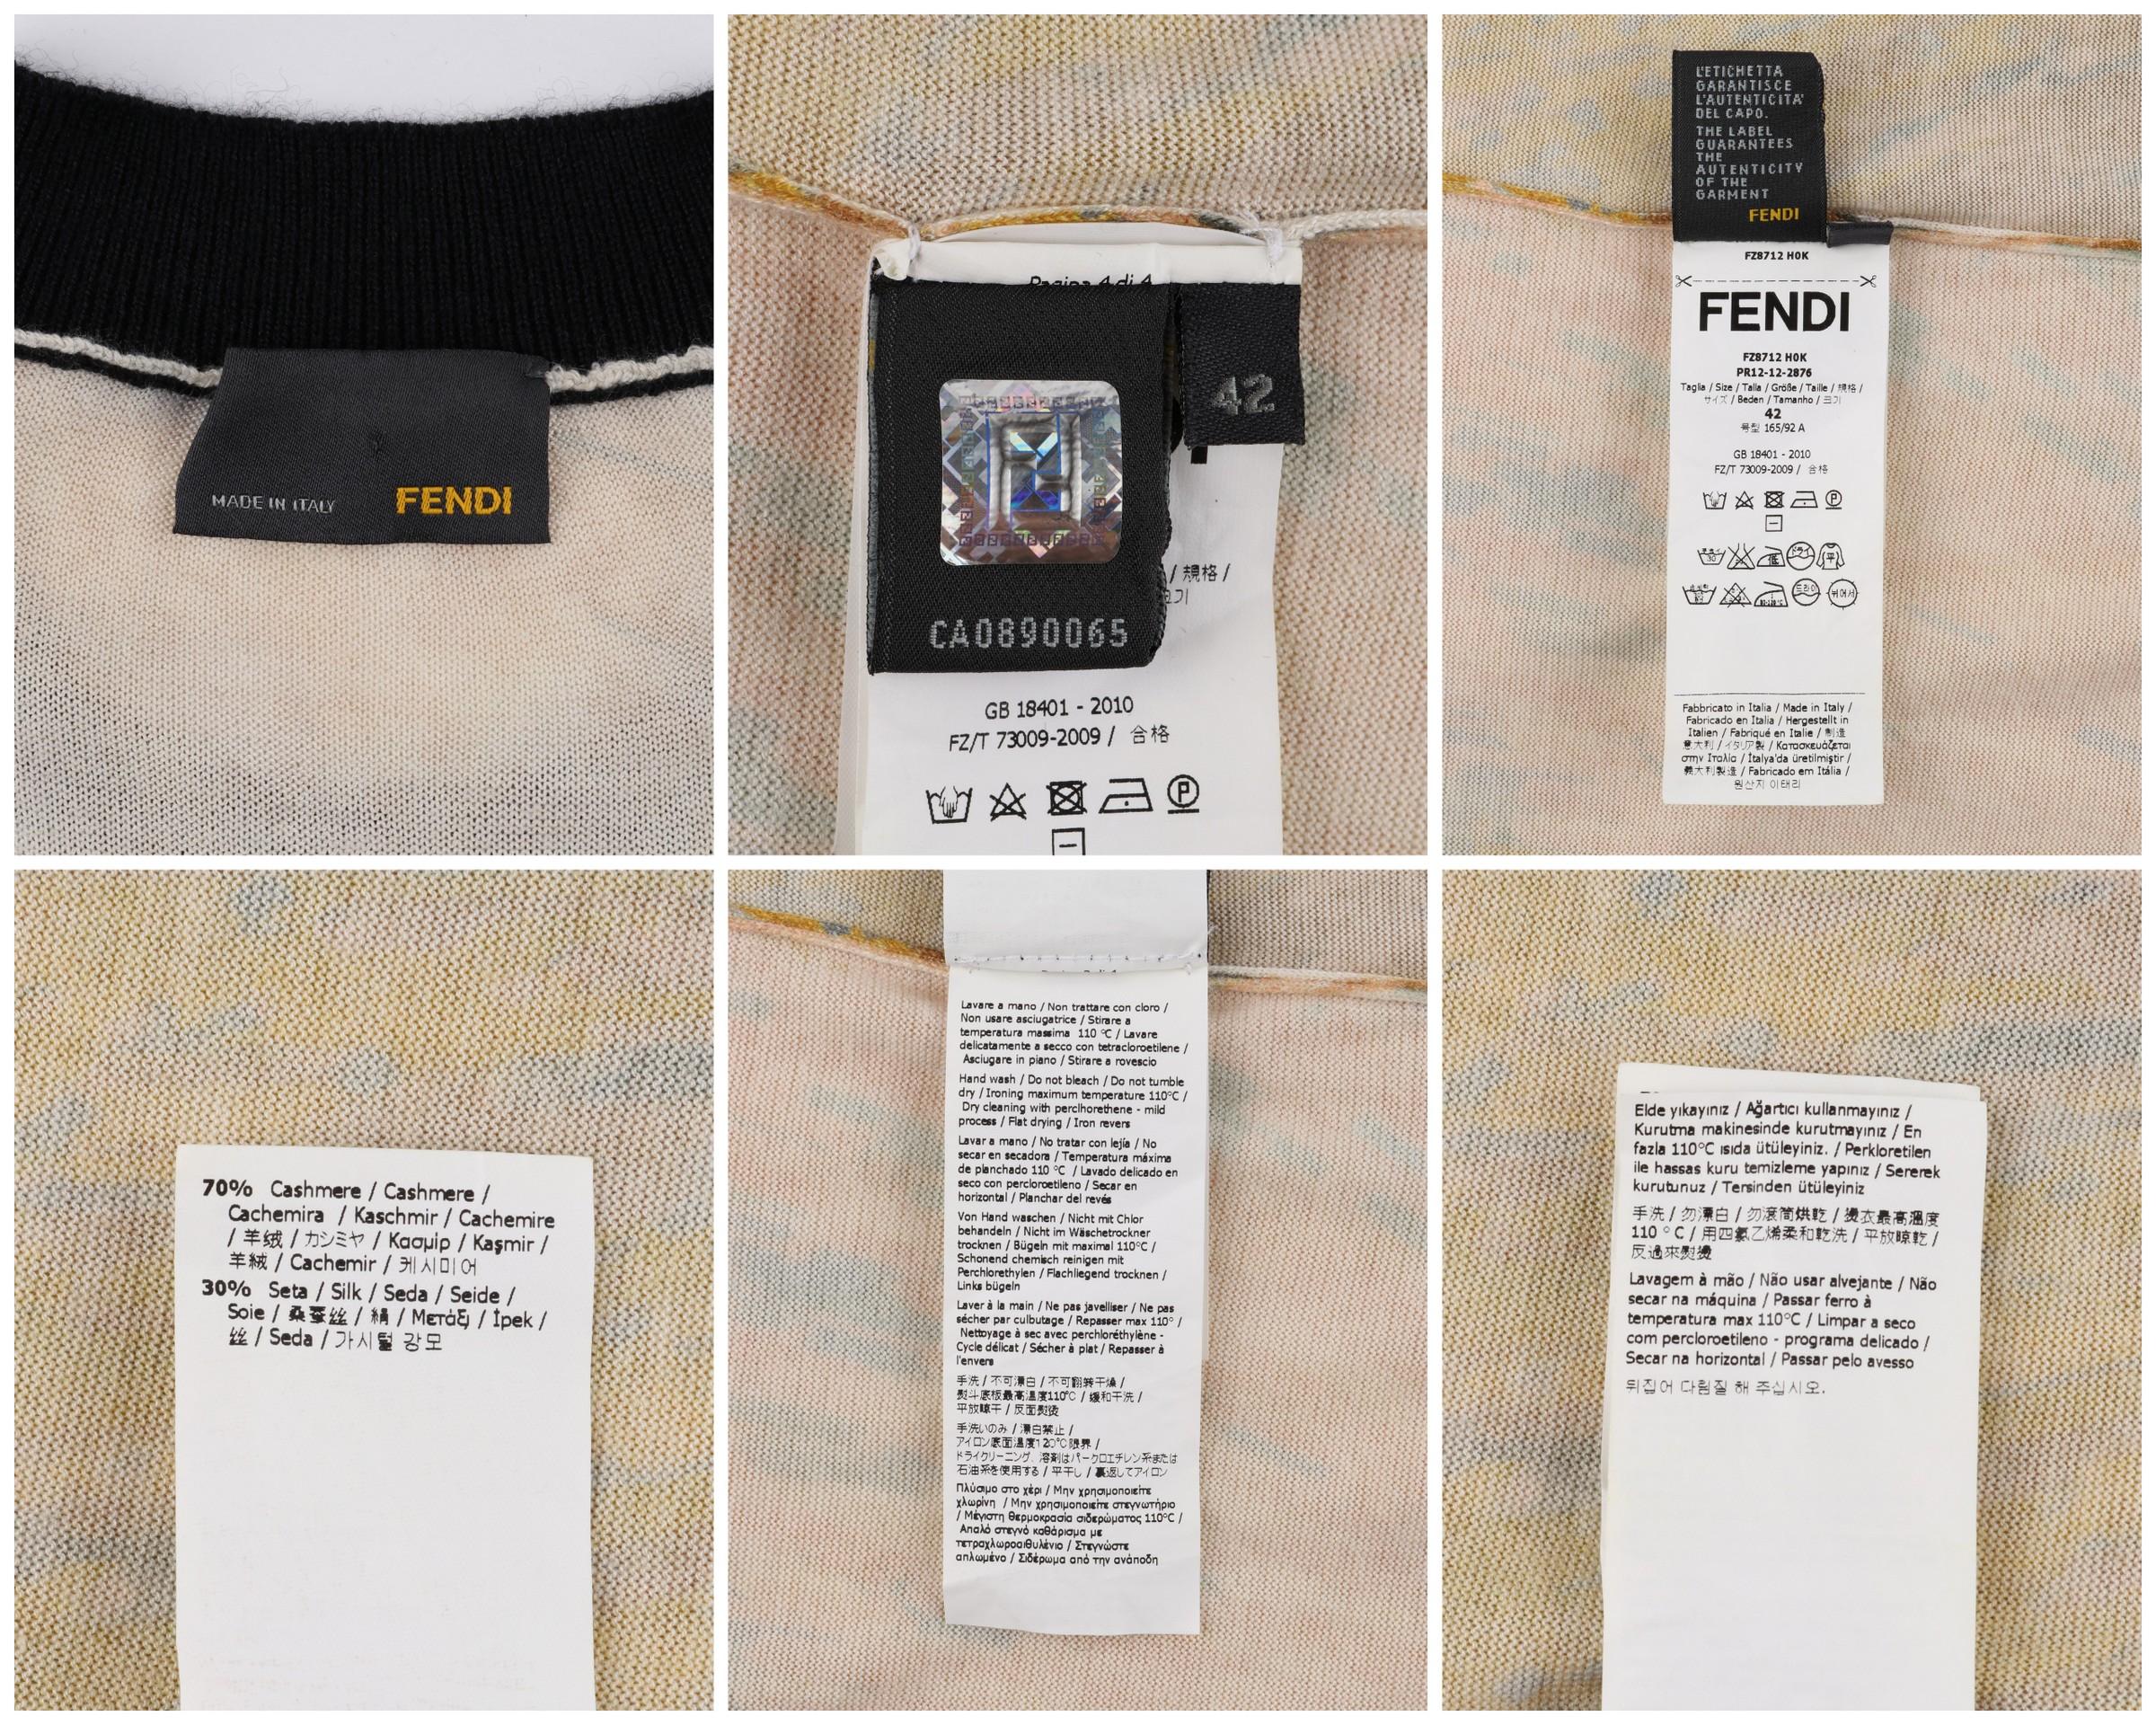 FENDI S/S 2013 Silk Cashmere Abstract Pixel Print Jersey Knit T-Shirt Top SS 1